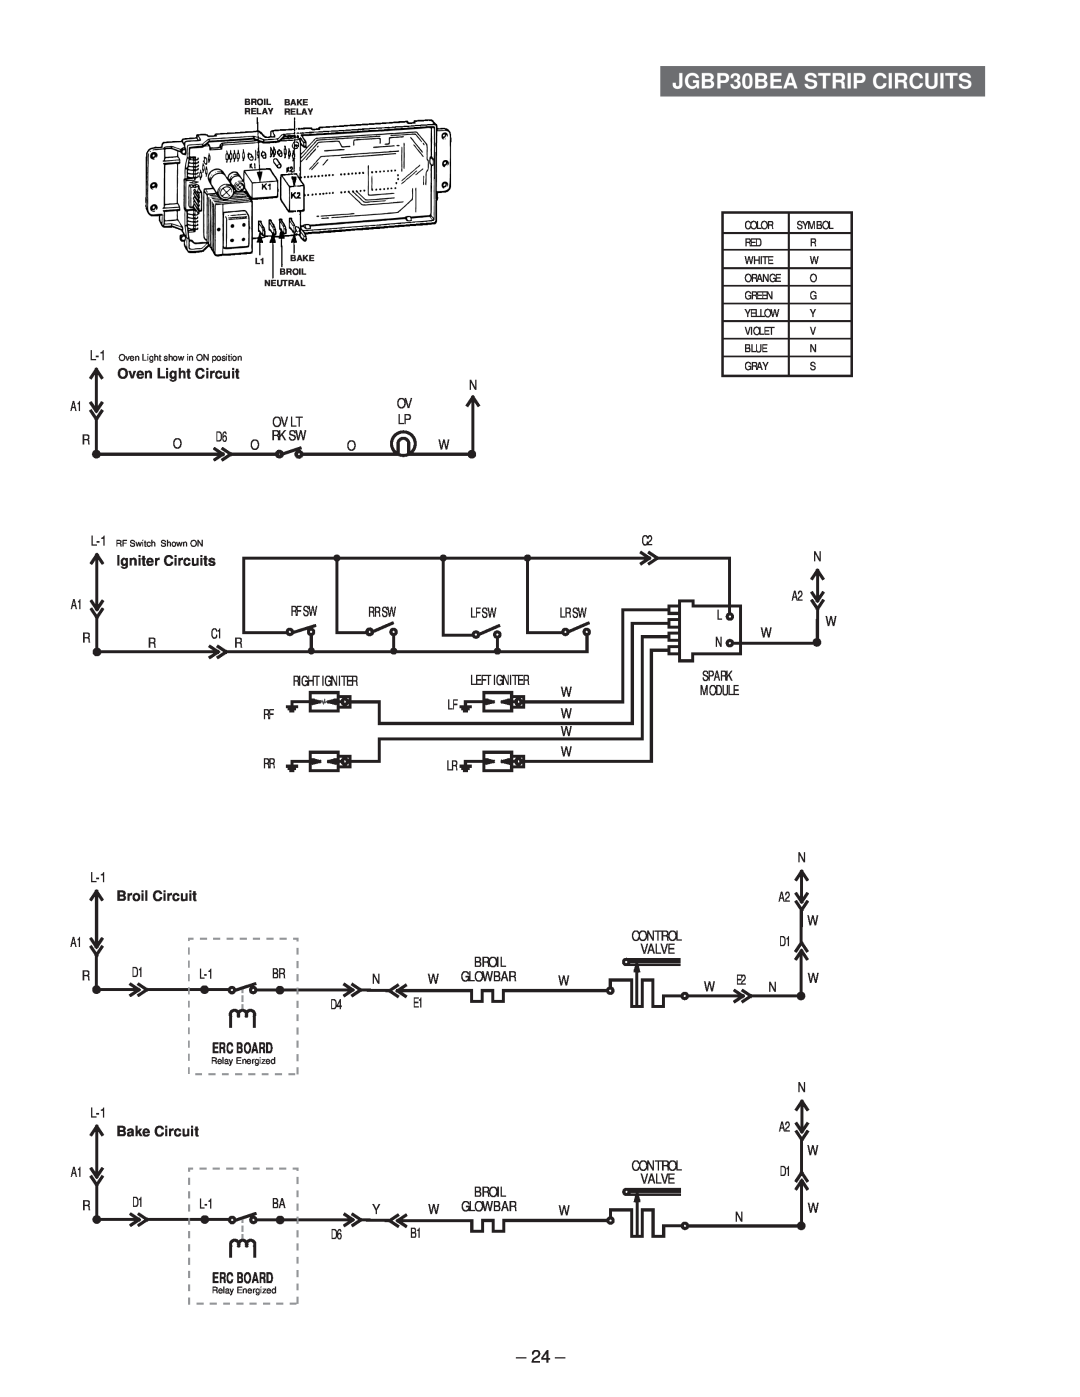 GE JGBP26 A, JGBP85 A, JGBP79 A, JGBP90 A, JGBP86 A, JGBP35 A Oven Light Circuit, Igniter Circuits, Broil Circuit, Erc Board 